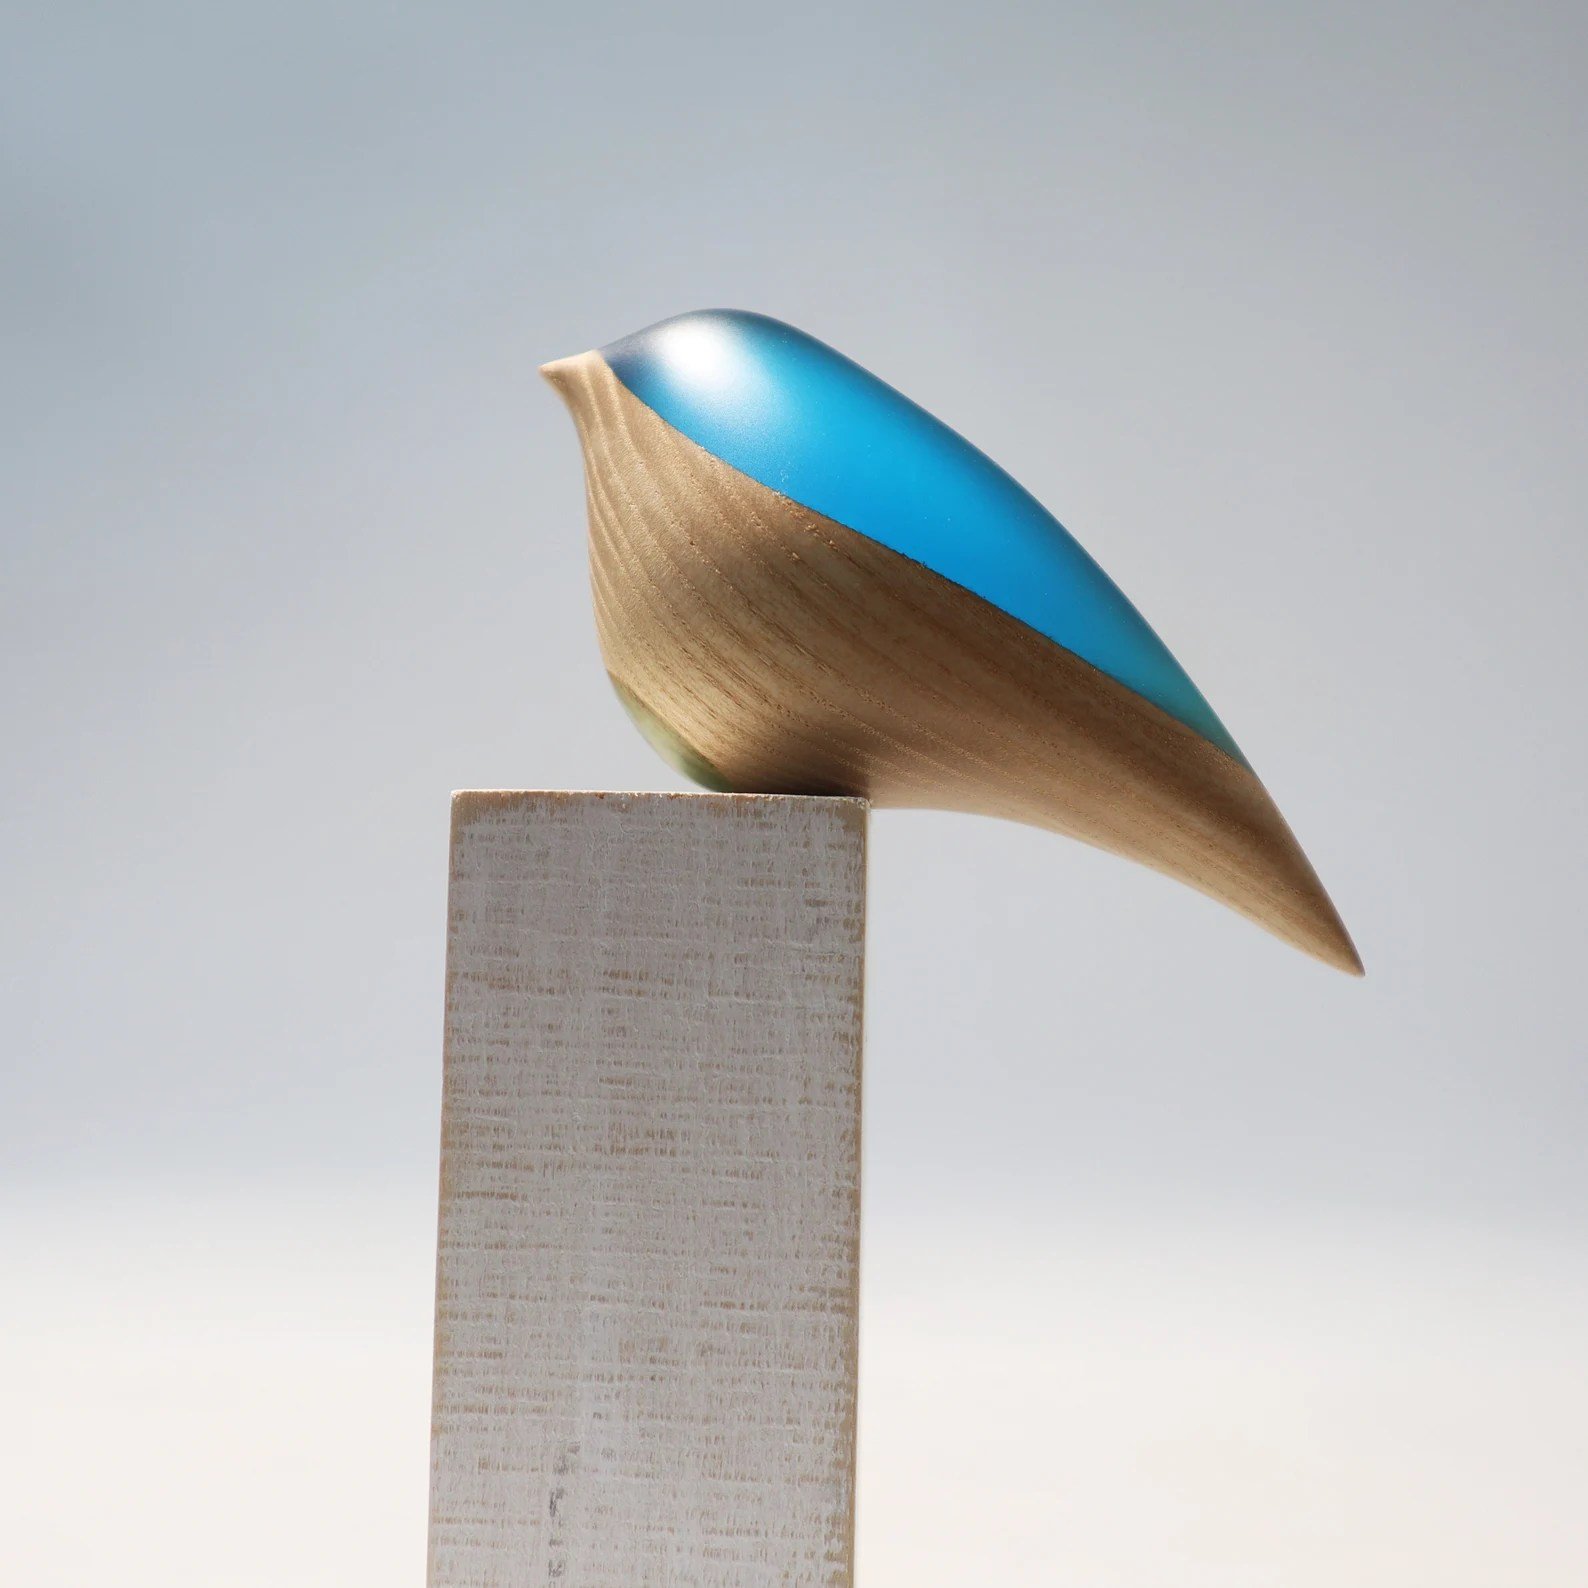 Ukrainian Artist Creates Sleek Wood and Resin Birds